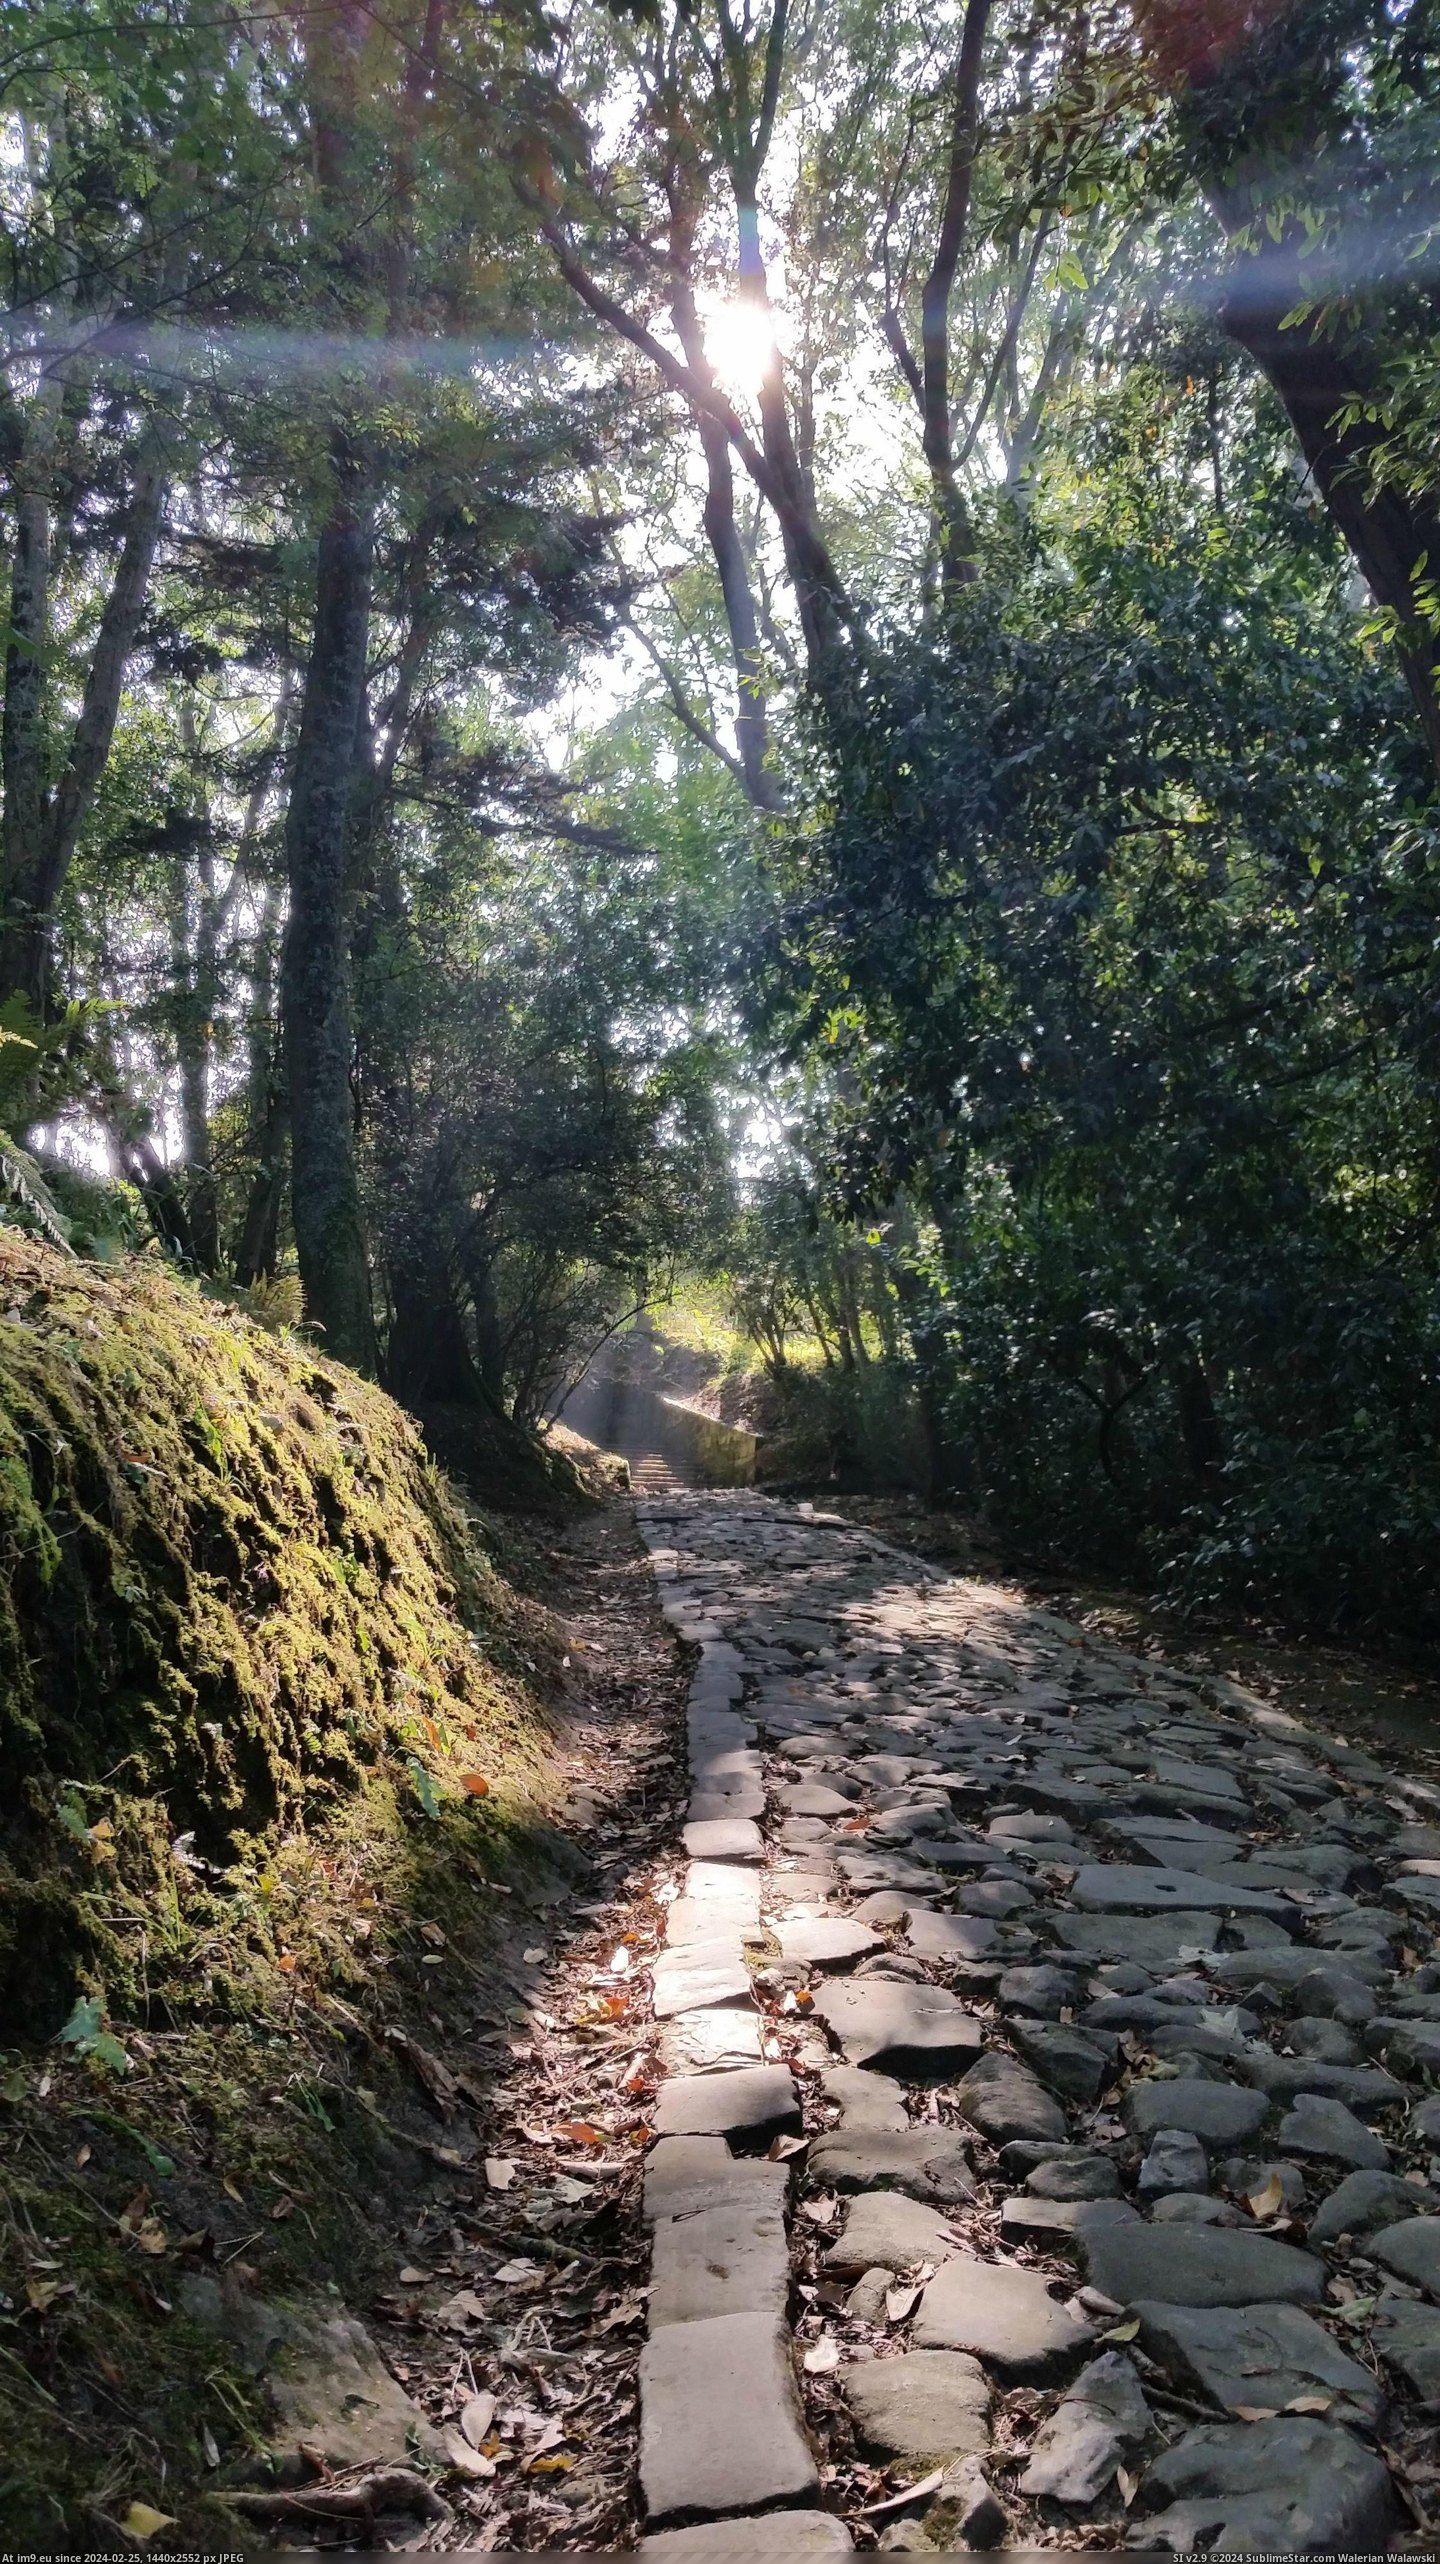 #Hope #San #Foot #Path #Rules #Sebastian #Sub #Spain #Fits [Earthporn] San Sebastian, Spain foot path [OC] [5312 x 2988] - hope it fits the Sub rules! Pic. (Изображение из альбом My r/EARTHPORN favs))